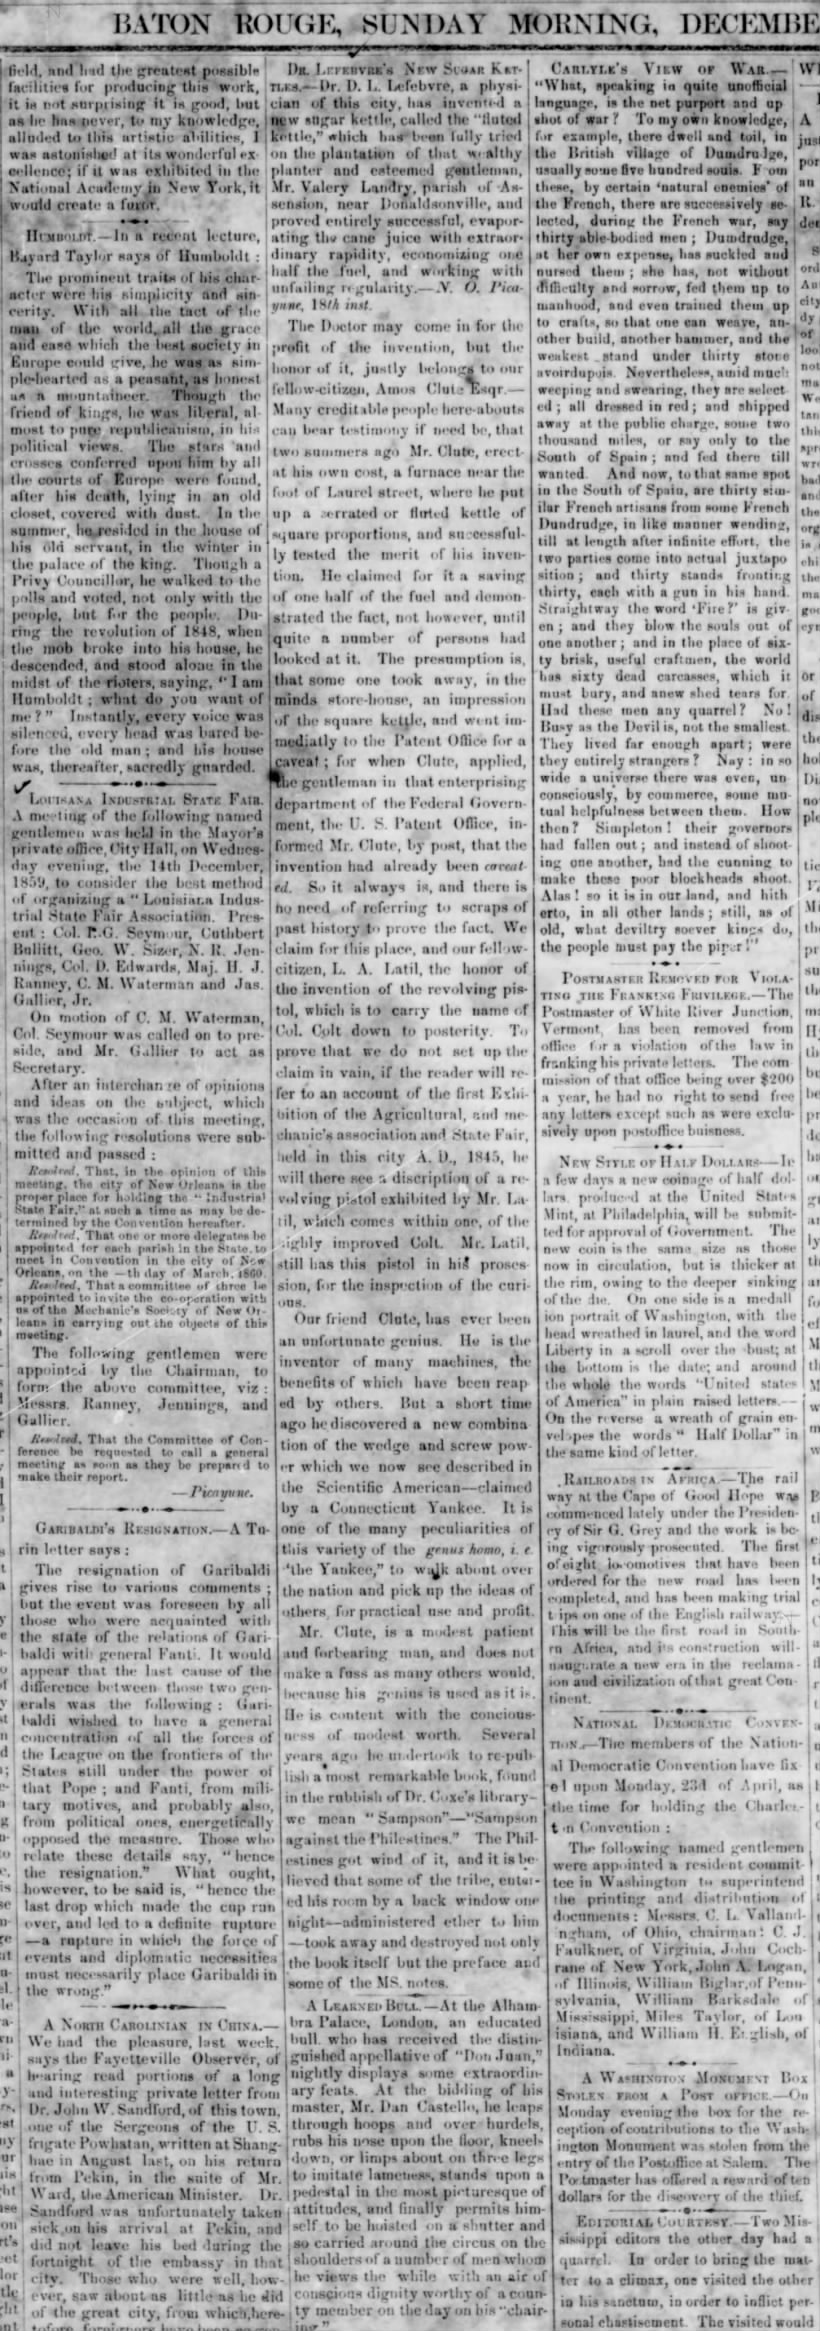 NEWS 1859 Dec 5 LATIL pistol invention and patents